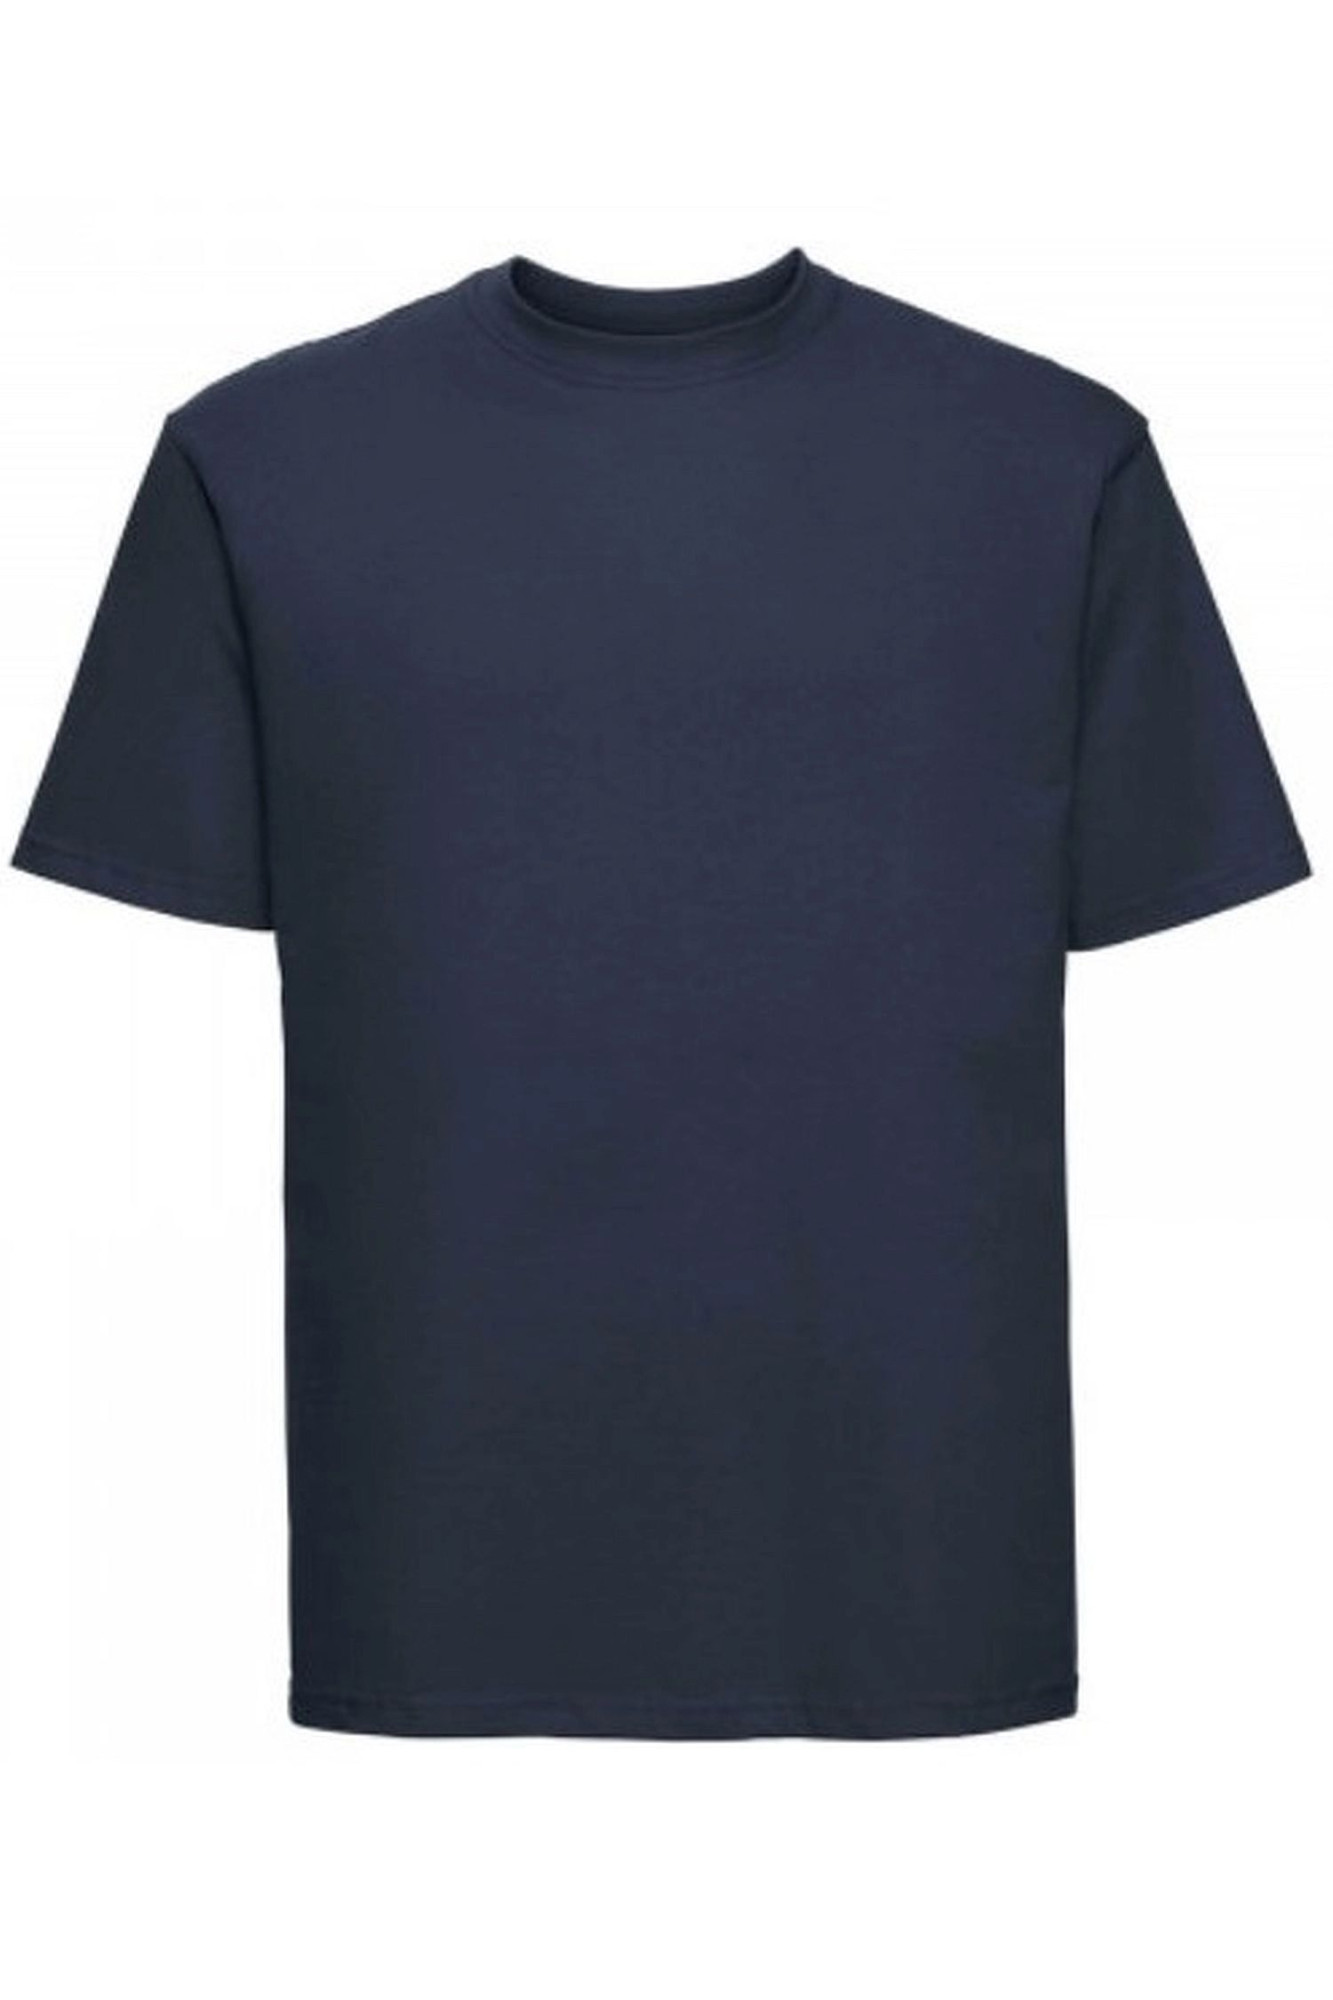 Pánské tričko 002 dark blue - NOVITI tmavě modrá L